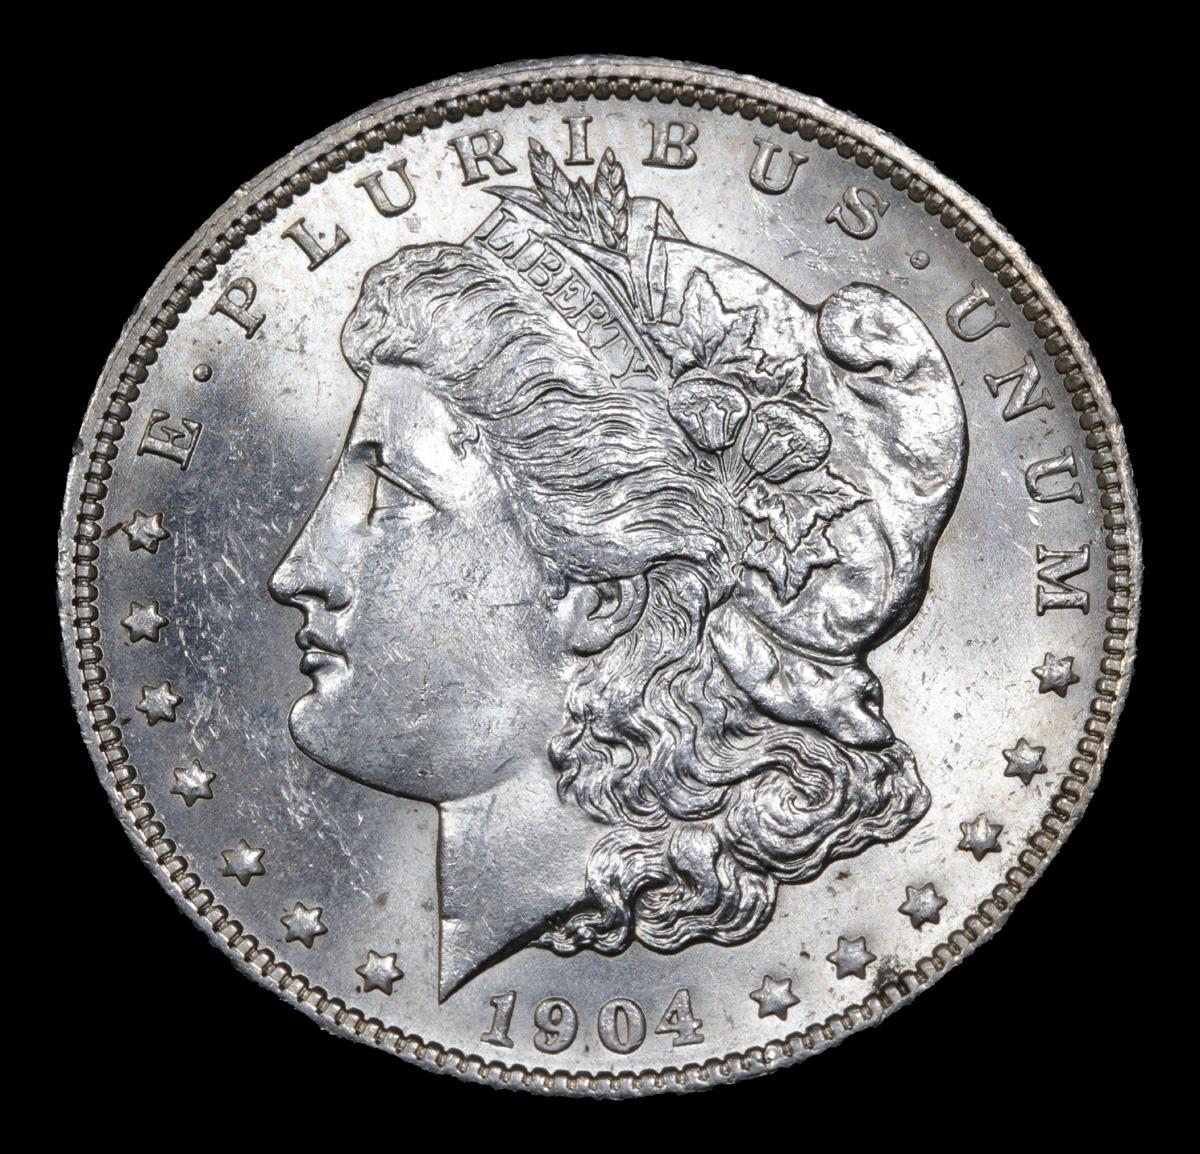 1904-o Morgan Dollar $1 Grades Select+ Unc